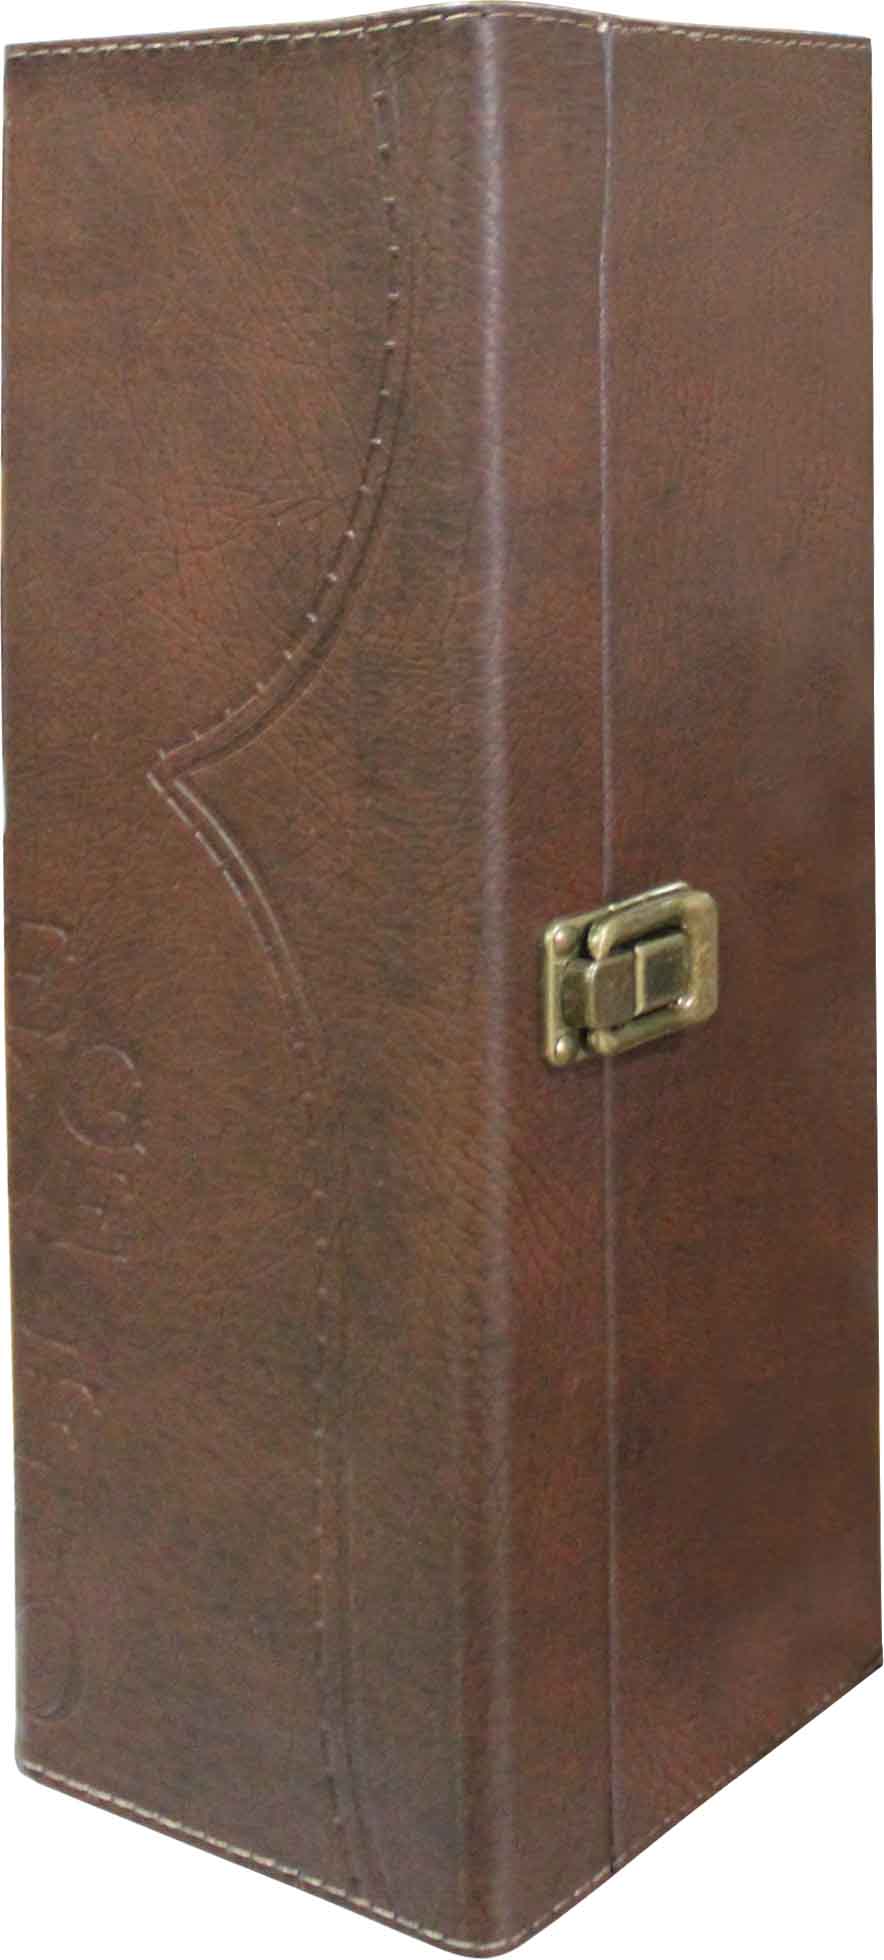 Luxury single leather box with handle